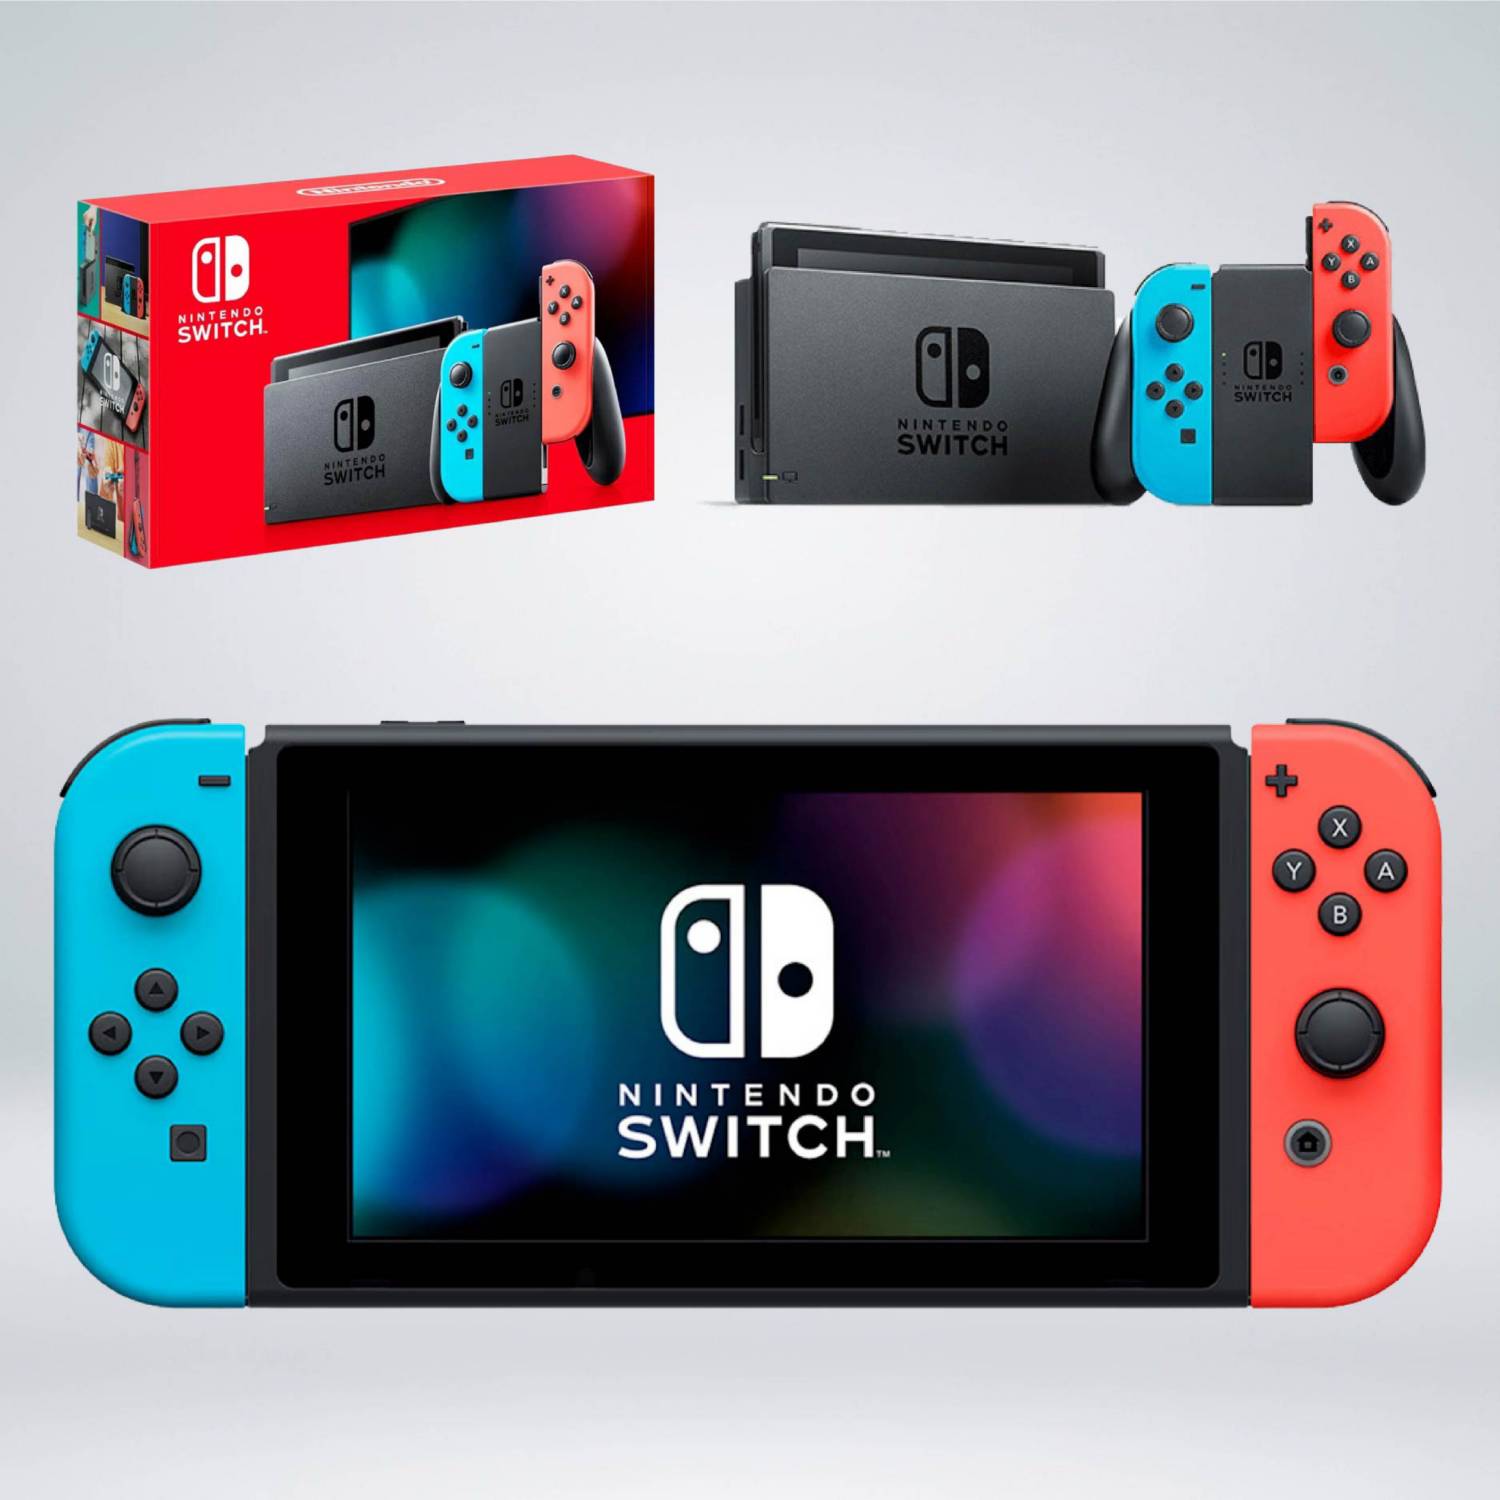 Nintendo switch neon. Nintendo Switch OLED. Nintendo Switch OLED 2. Nintendo Switch OLED 64gb (Neon). Nintendo Switch OLED vs Nintendo Switch.